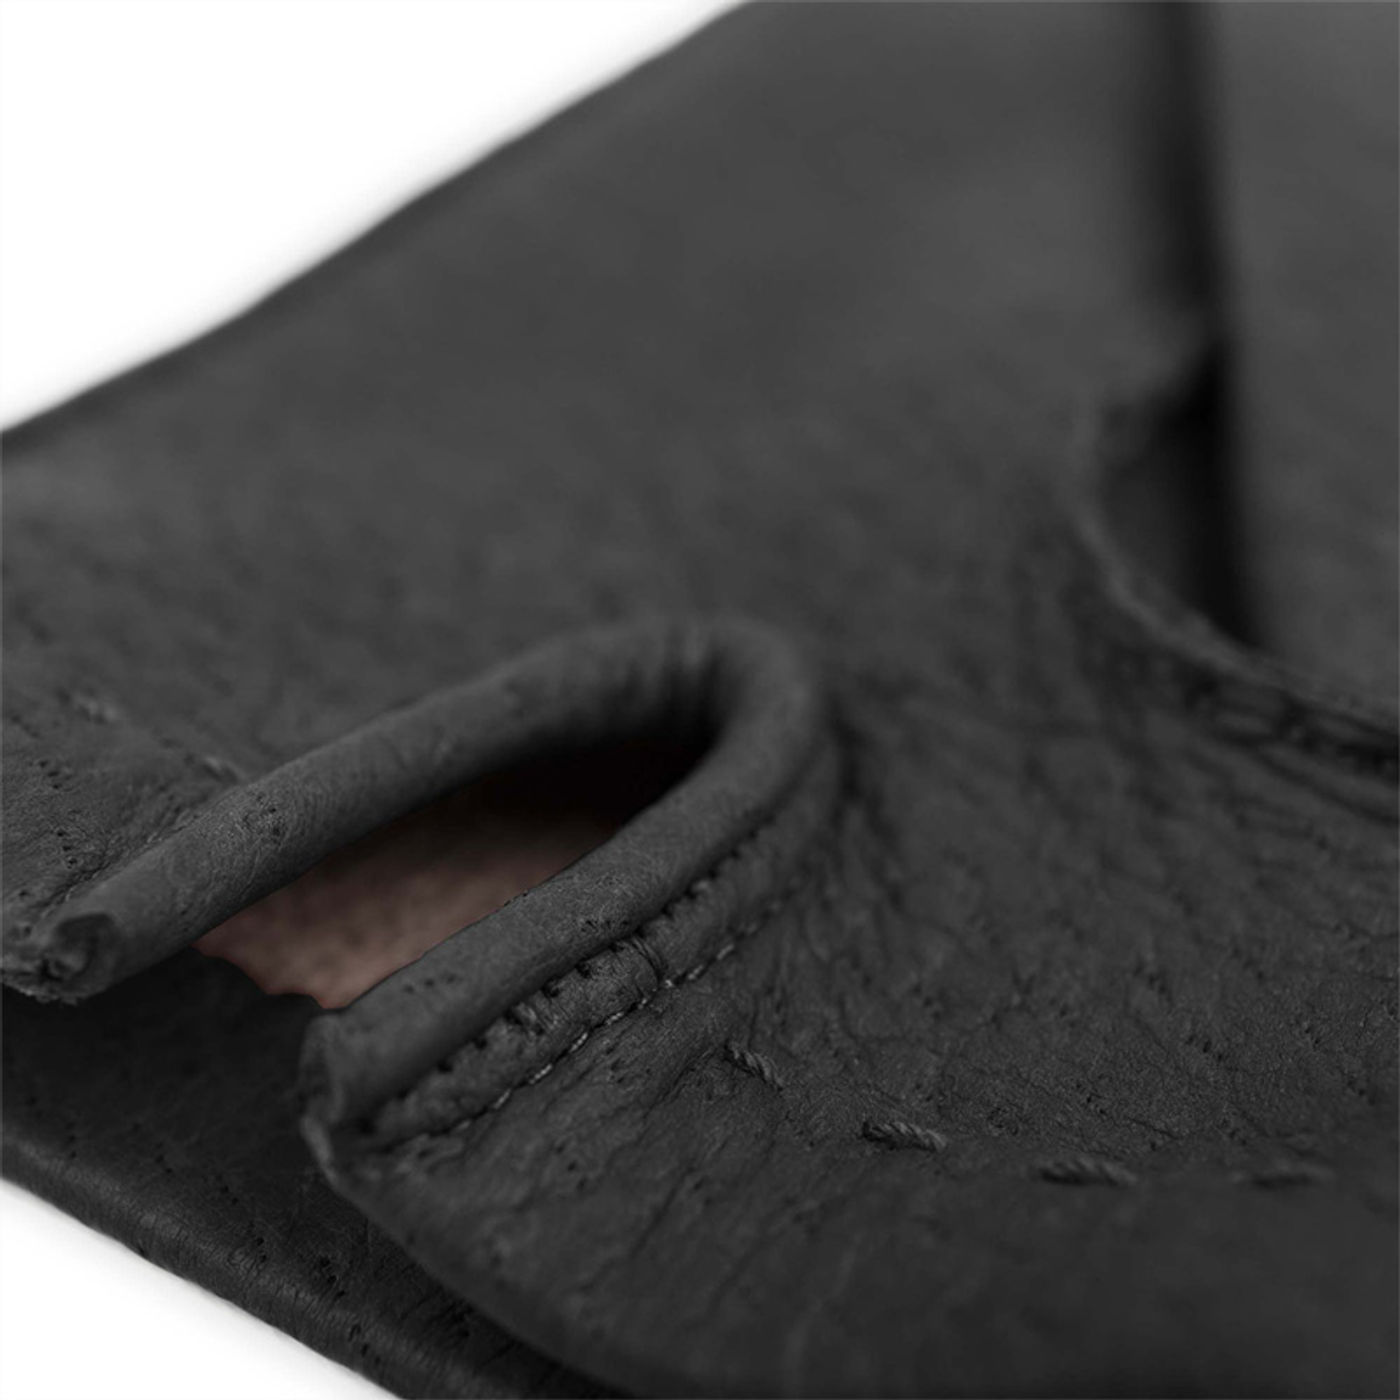 Black Ciro Peccary Leather Gloves  | Bombinate